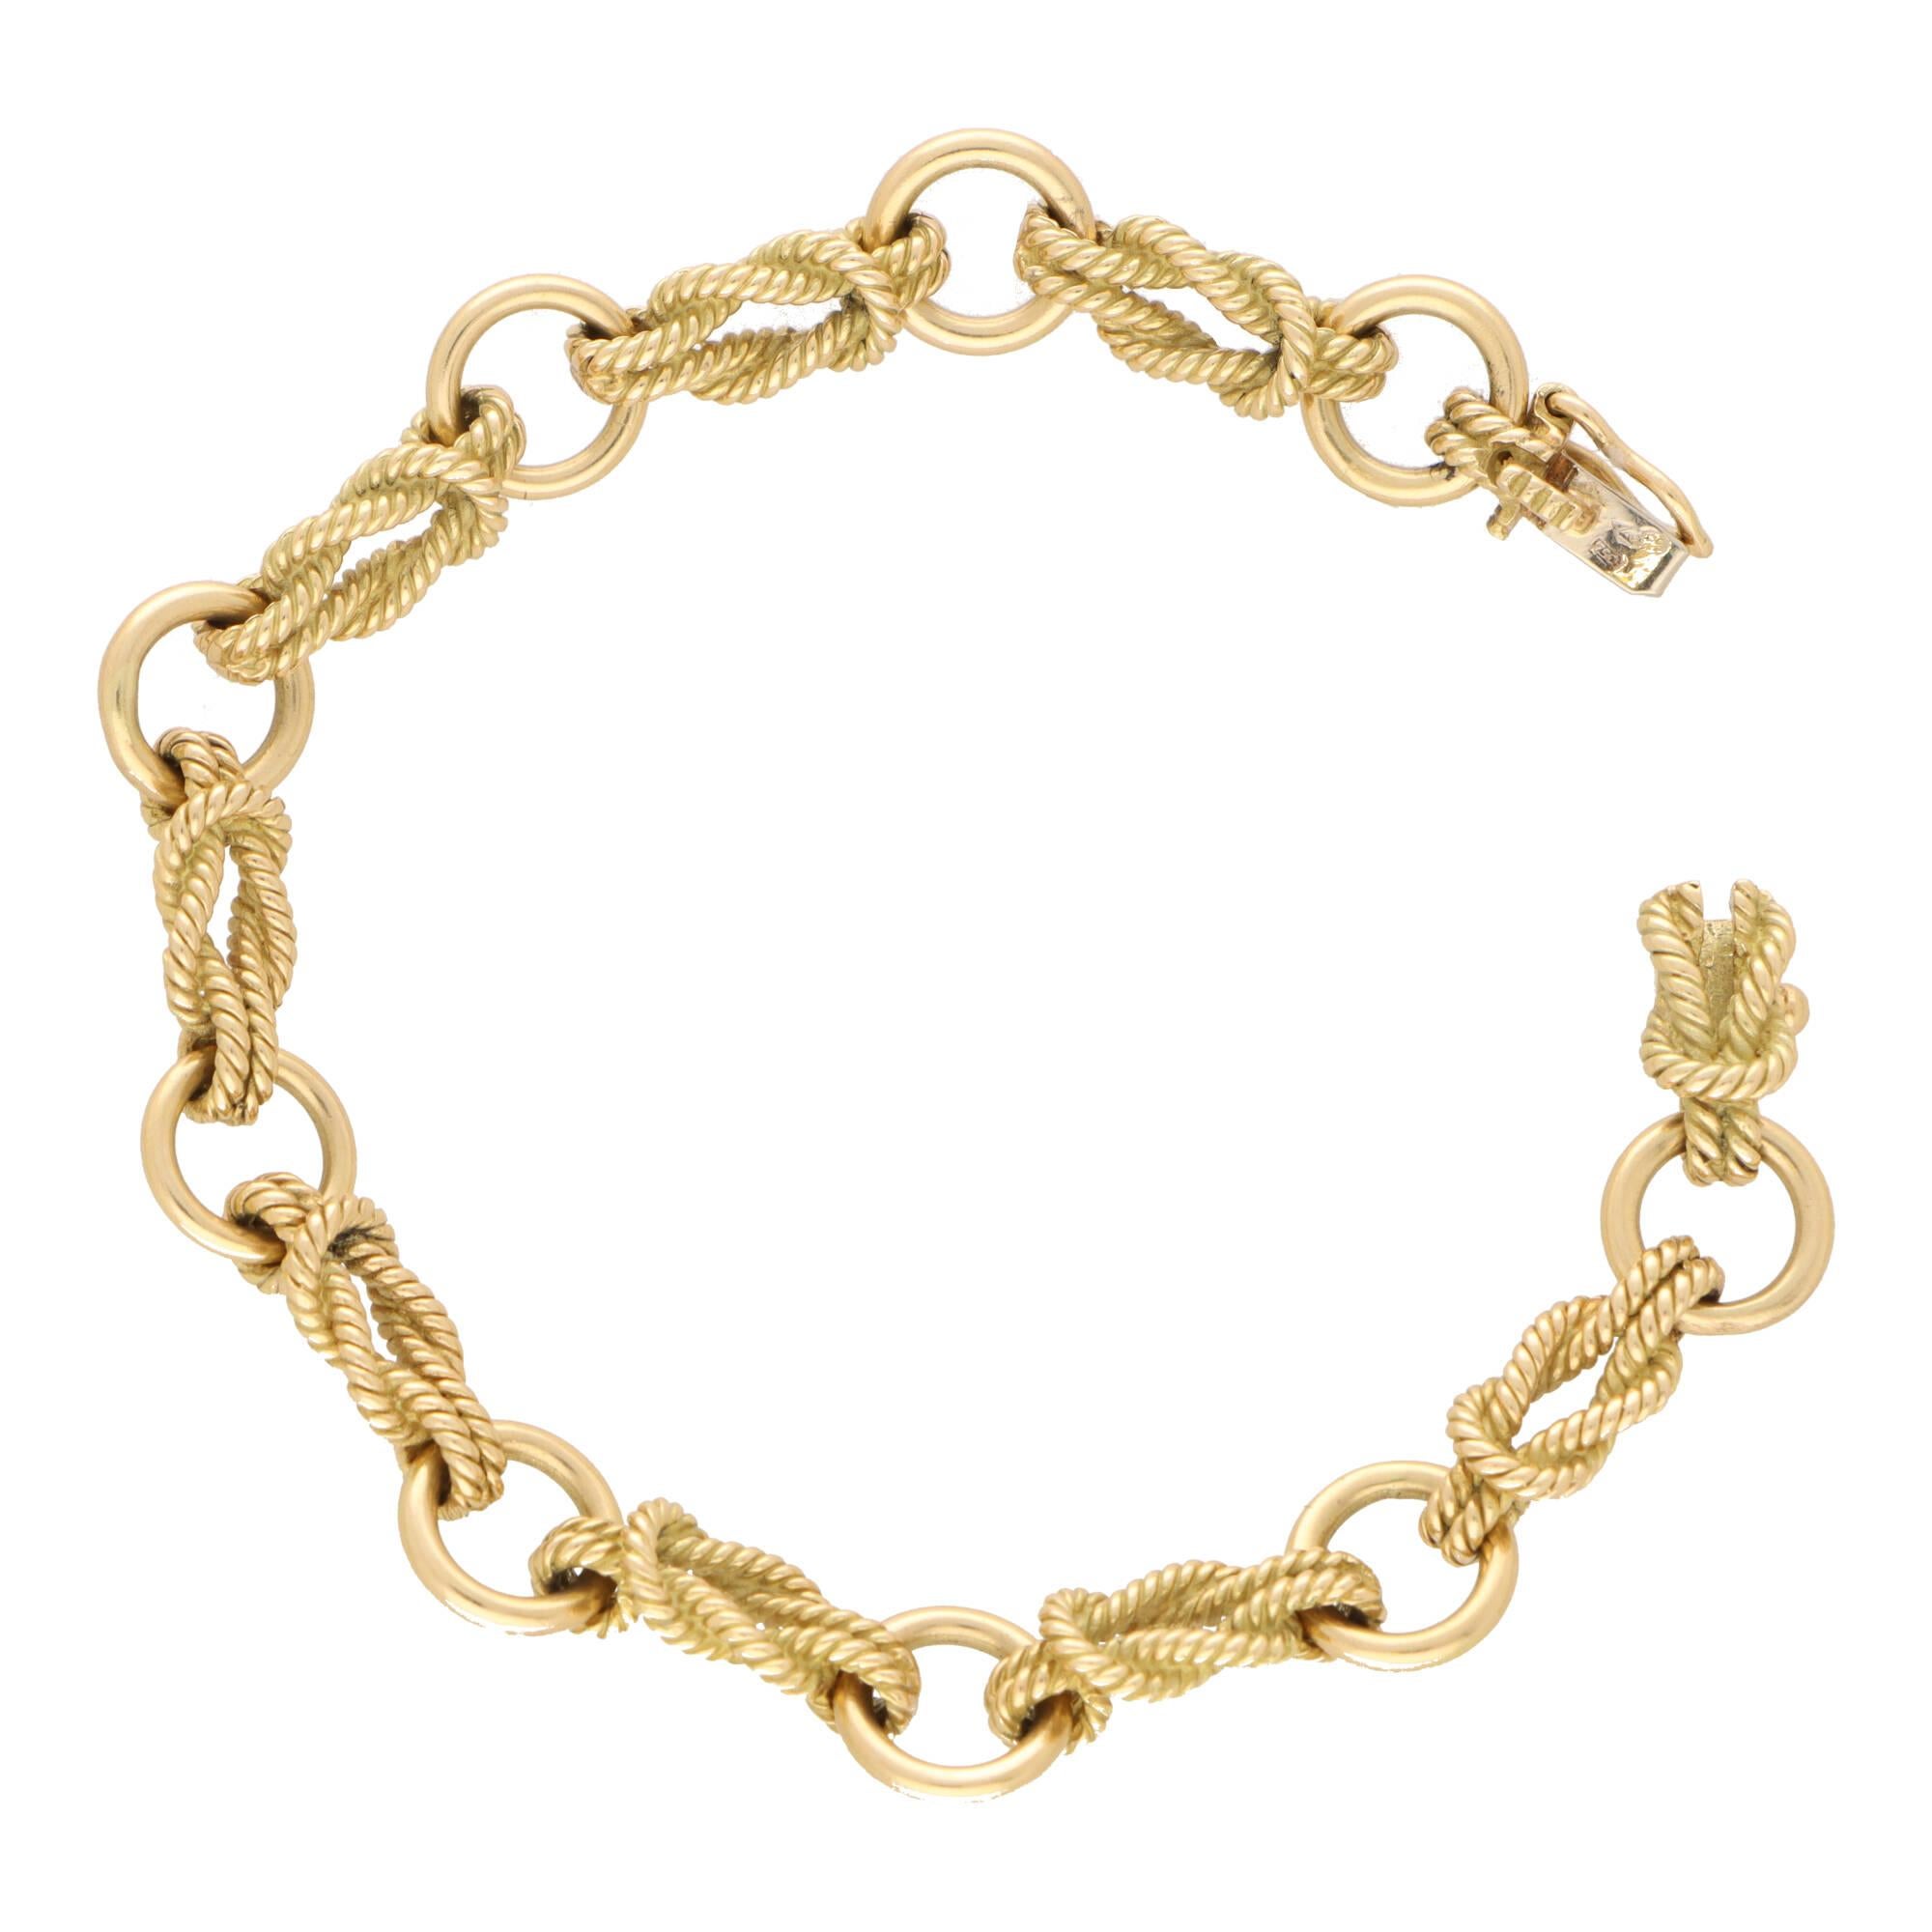 Retro Vintage Hermès Knot Link Bracelet Set in 18k Yellow Gold